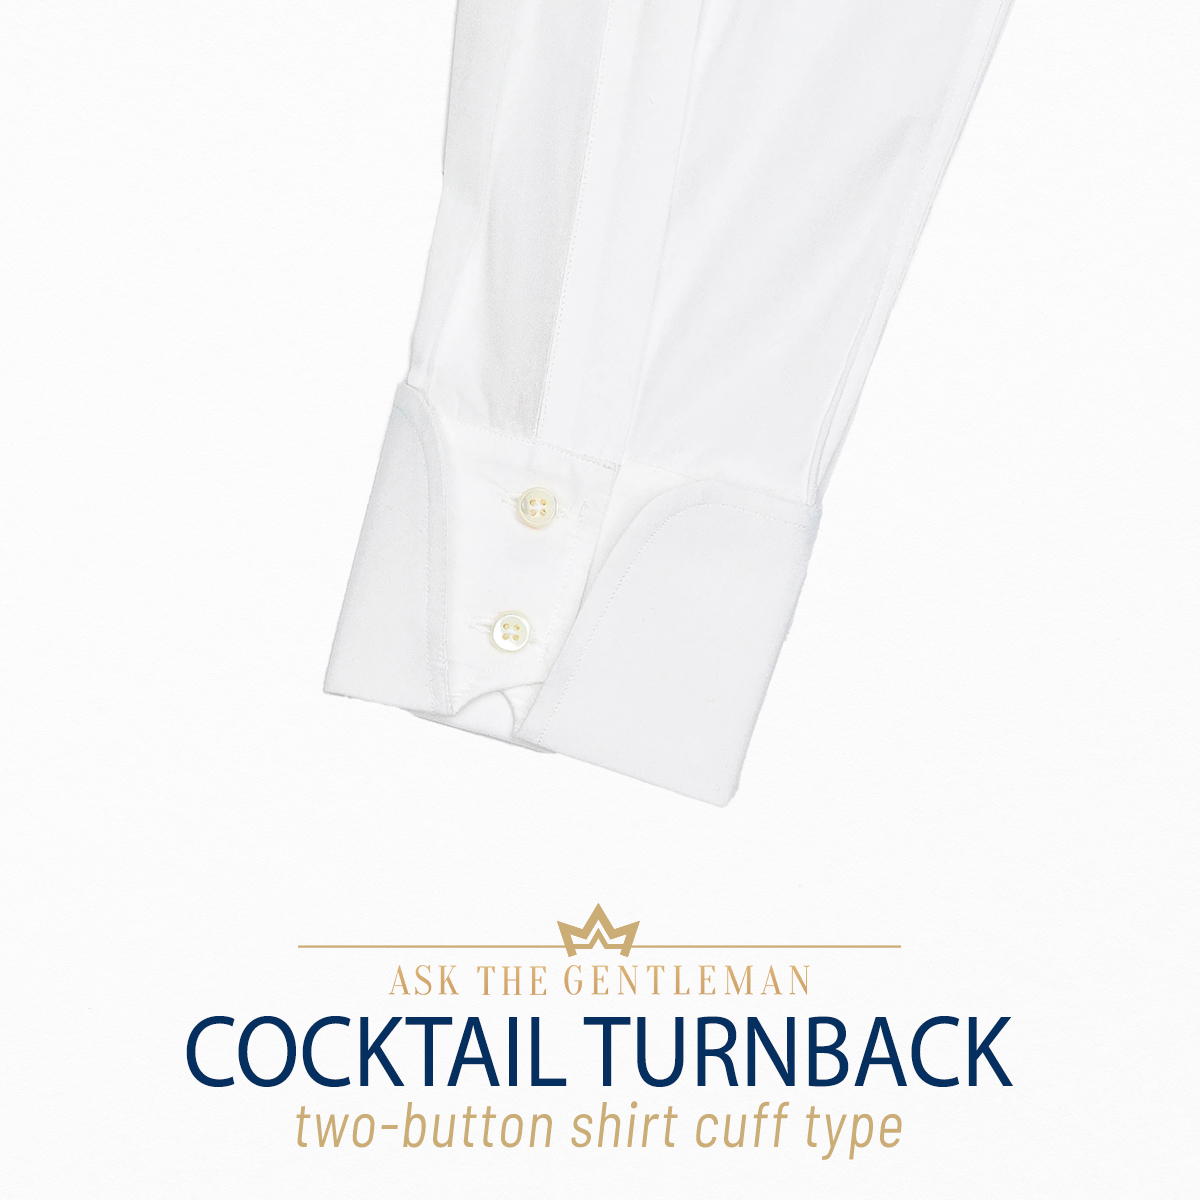 Cocktail turnback shirt cuff